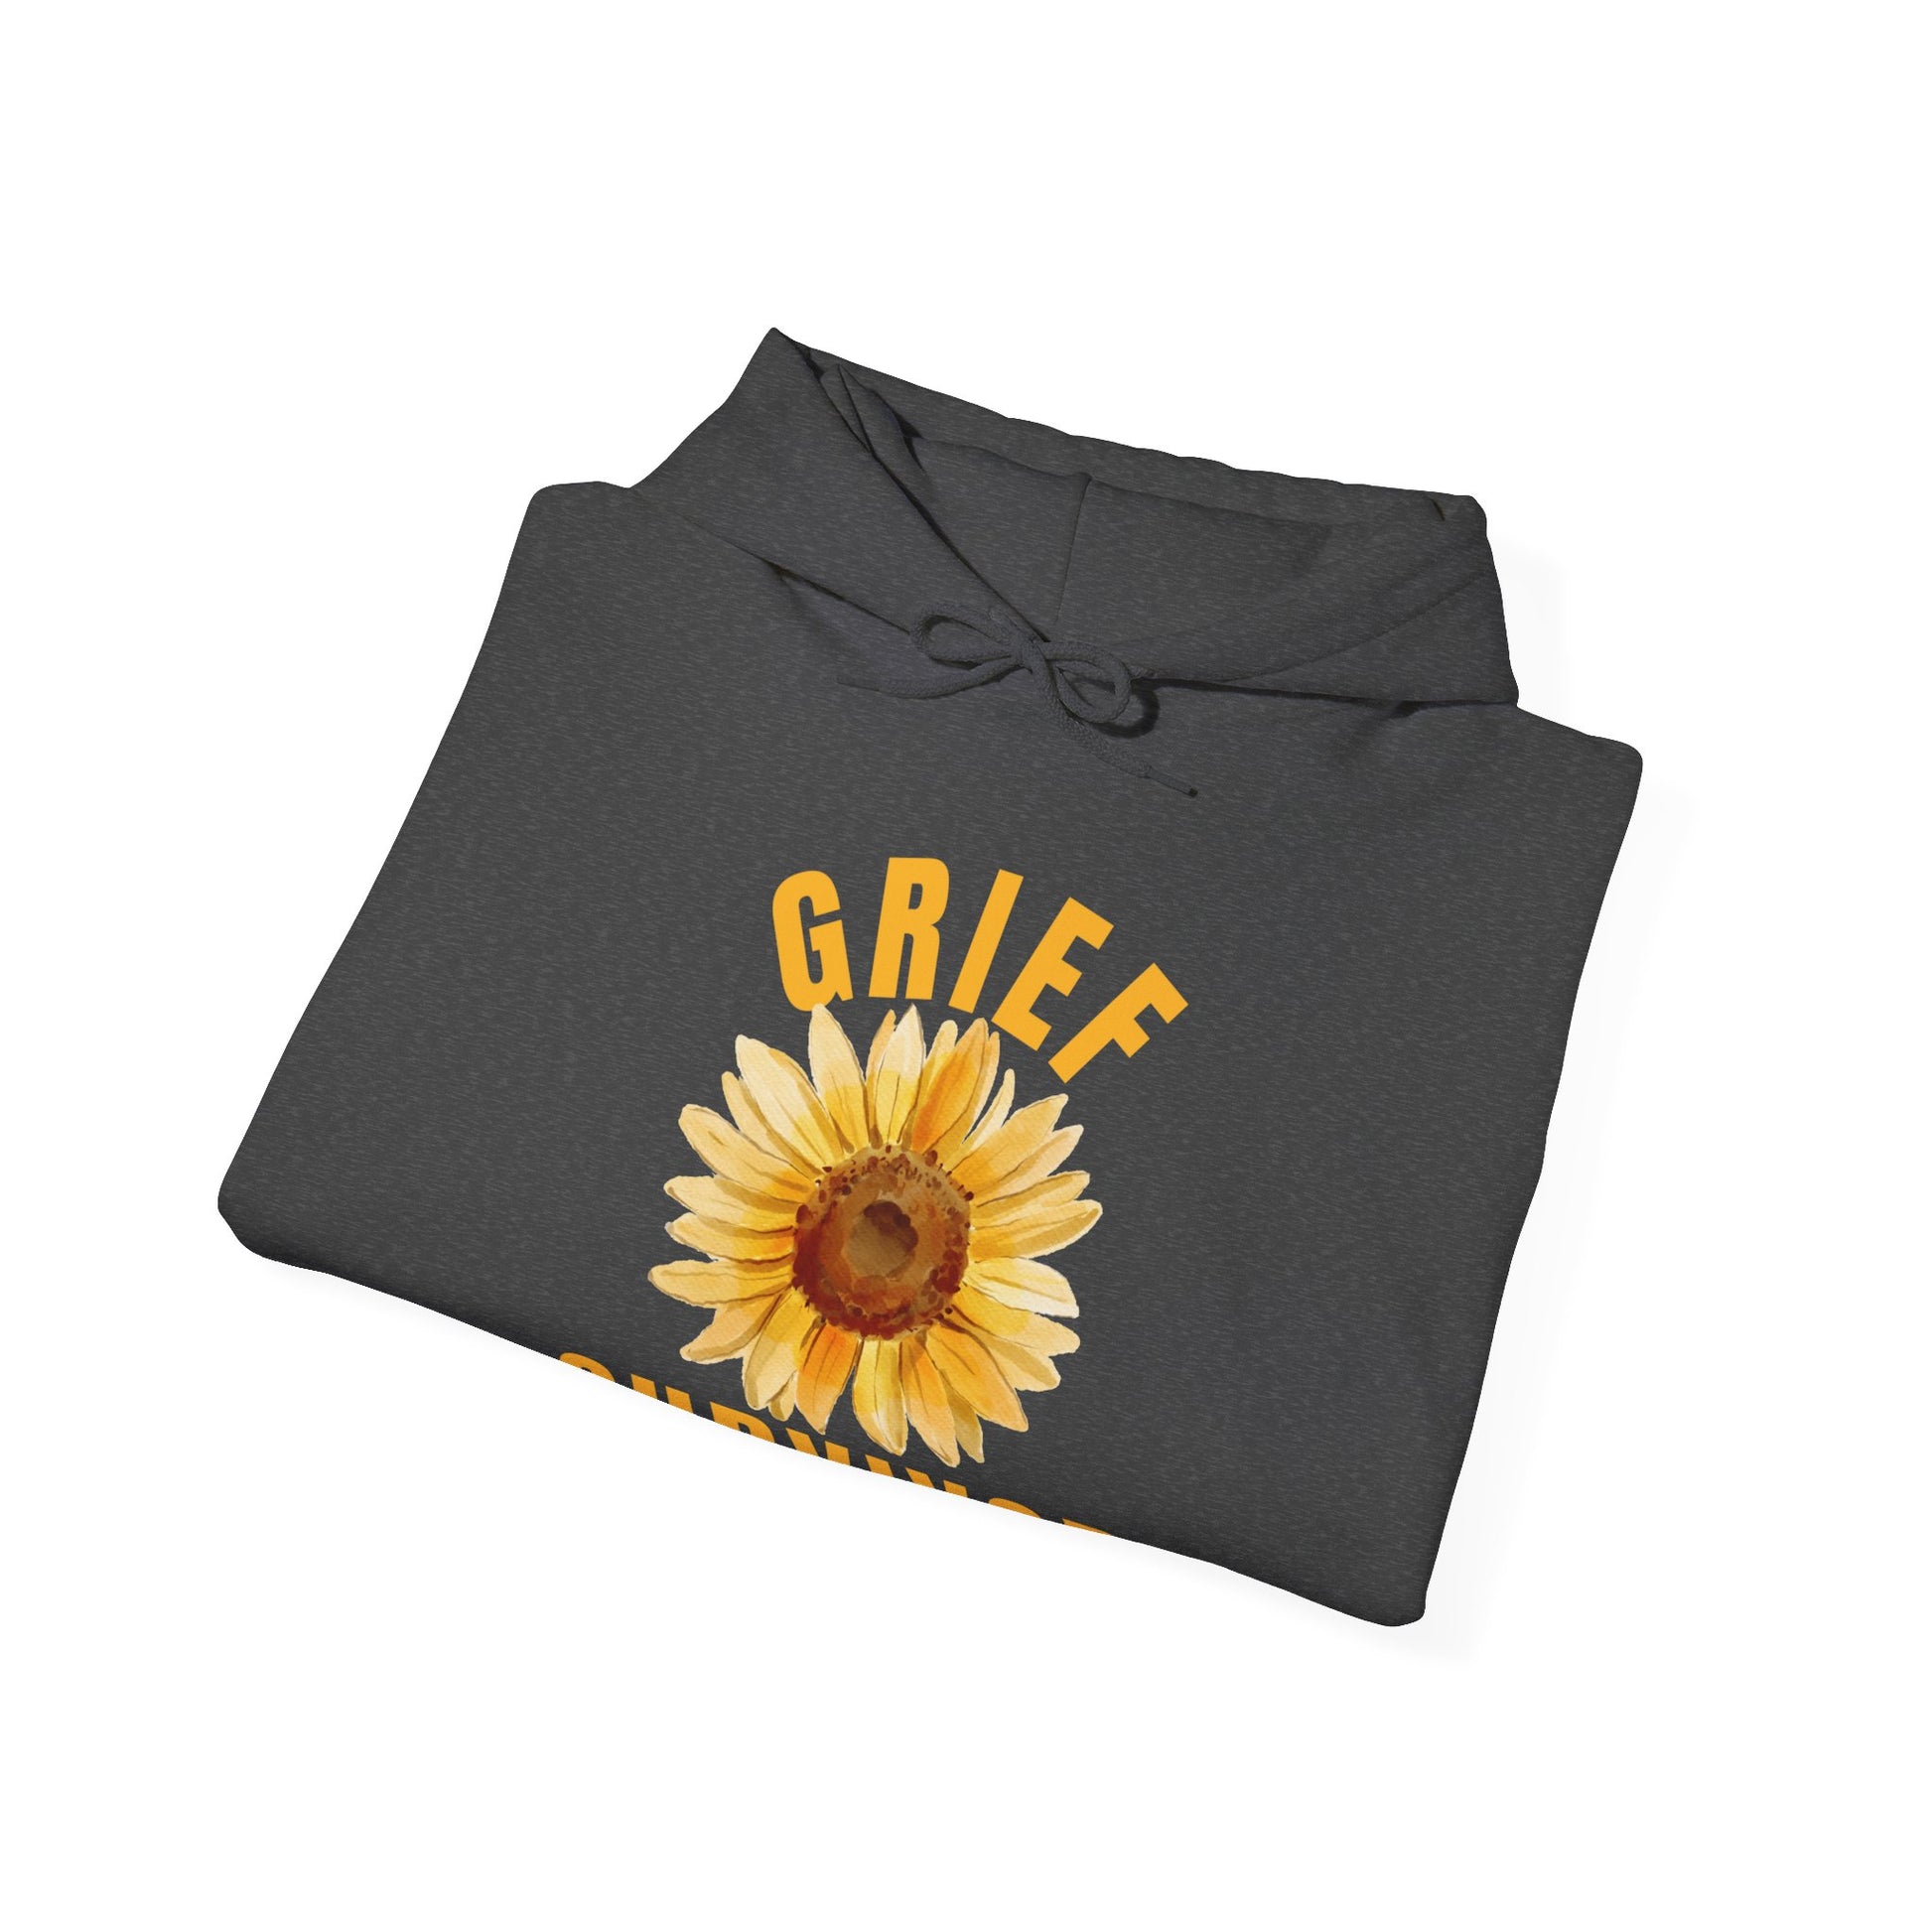 Grief Survivor Sunflower Gildan 18500 Hooded Sweatshirt in Dark Heather. Statement of survival and hope during hard times hoodie.